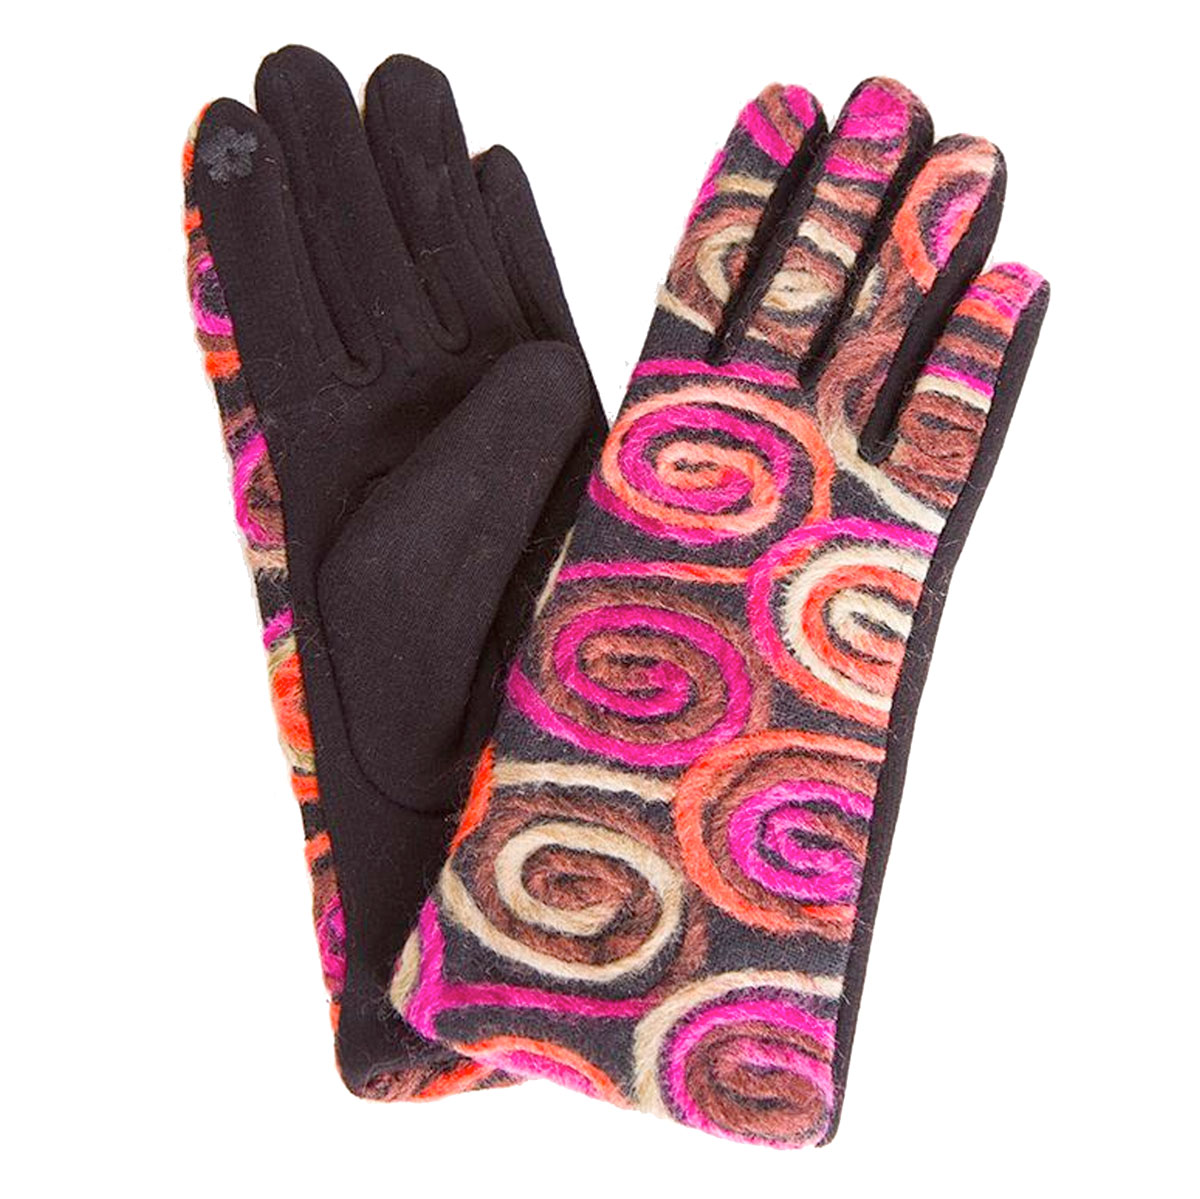 Wholesale Touch Screen Smart Gloves - Fleece Lined -570-PK Spiral Yarn ...